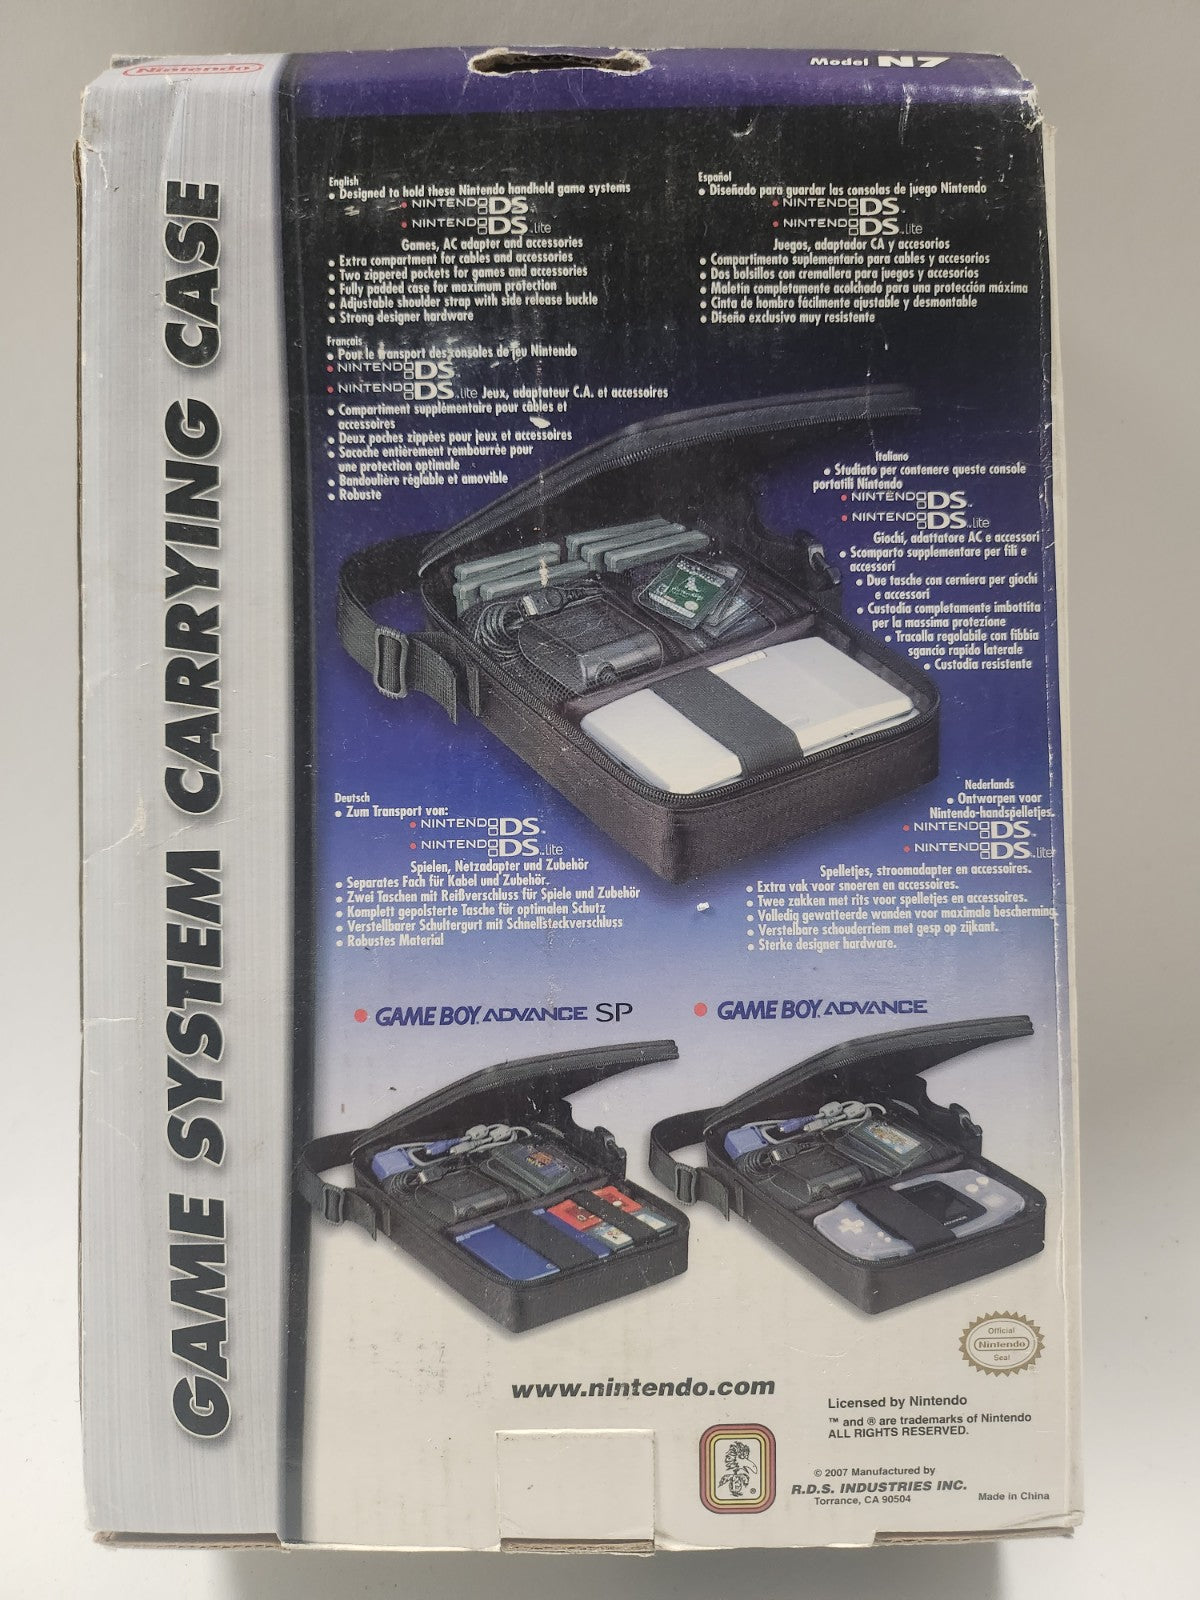 NIEUW Game System Carrying Case (Model N7) Nintendo DS